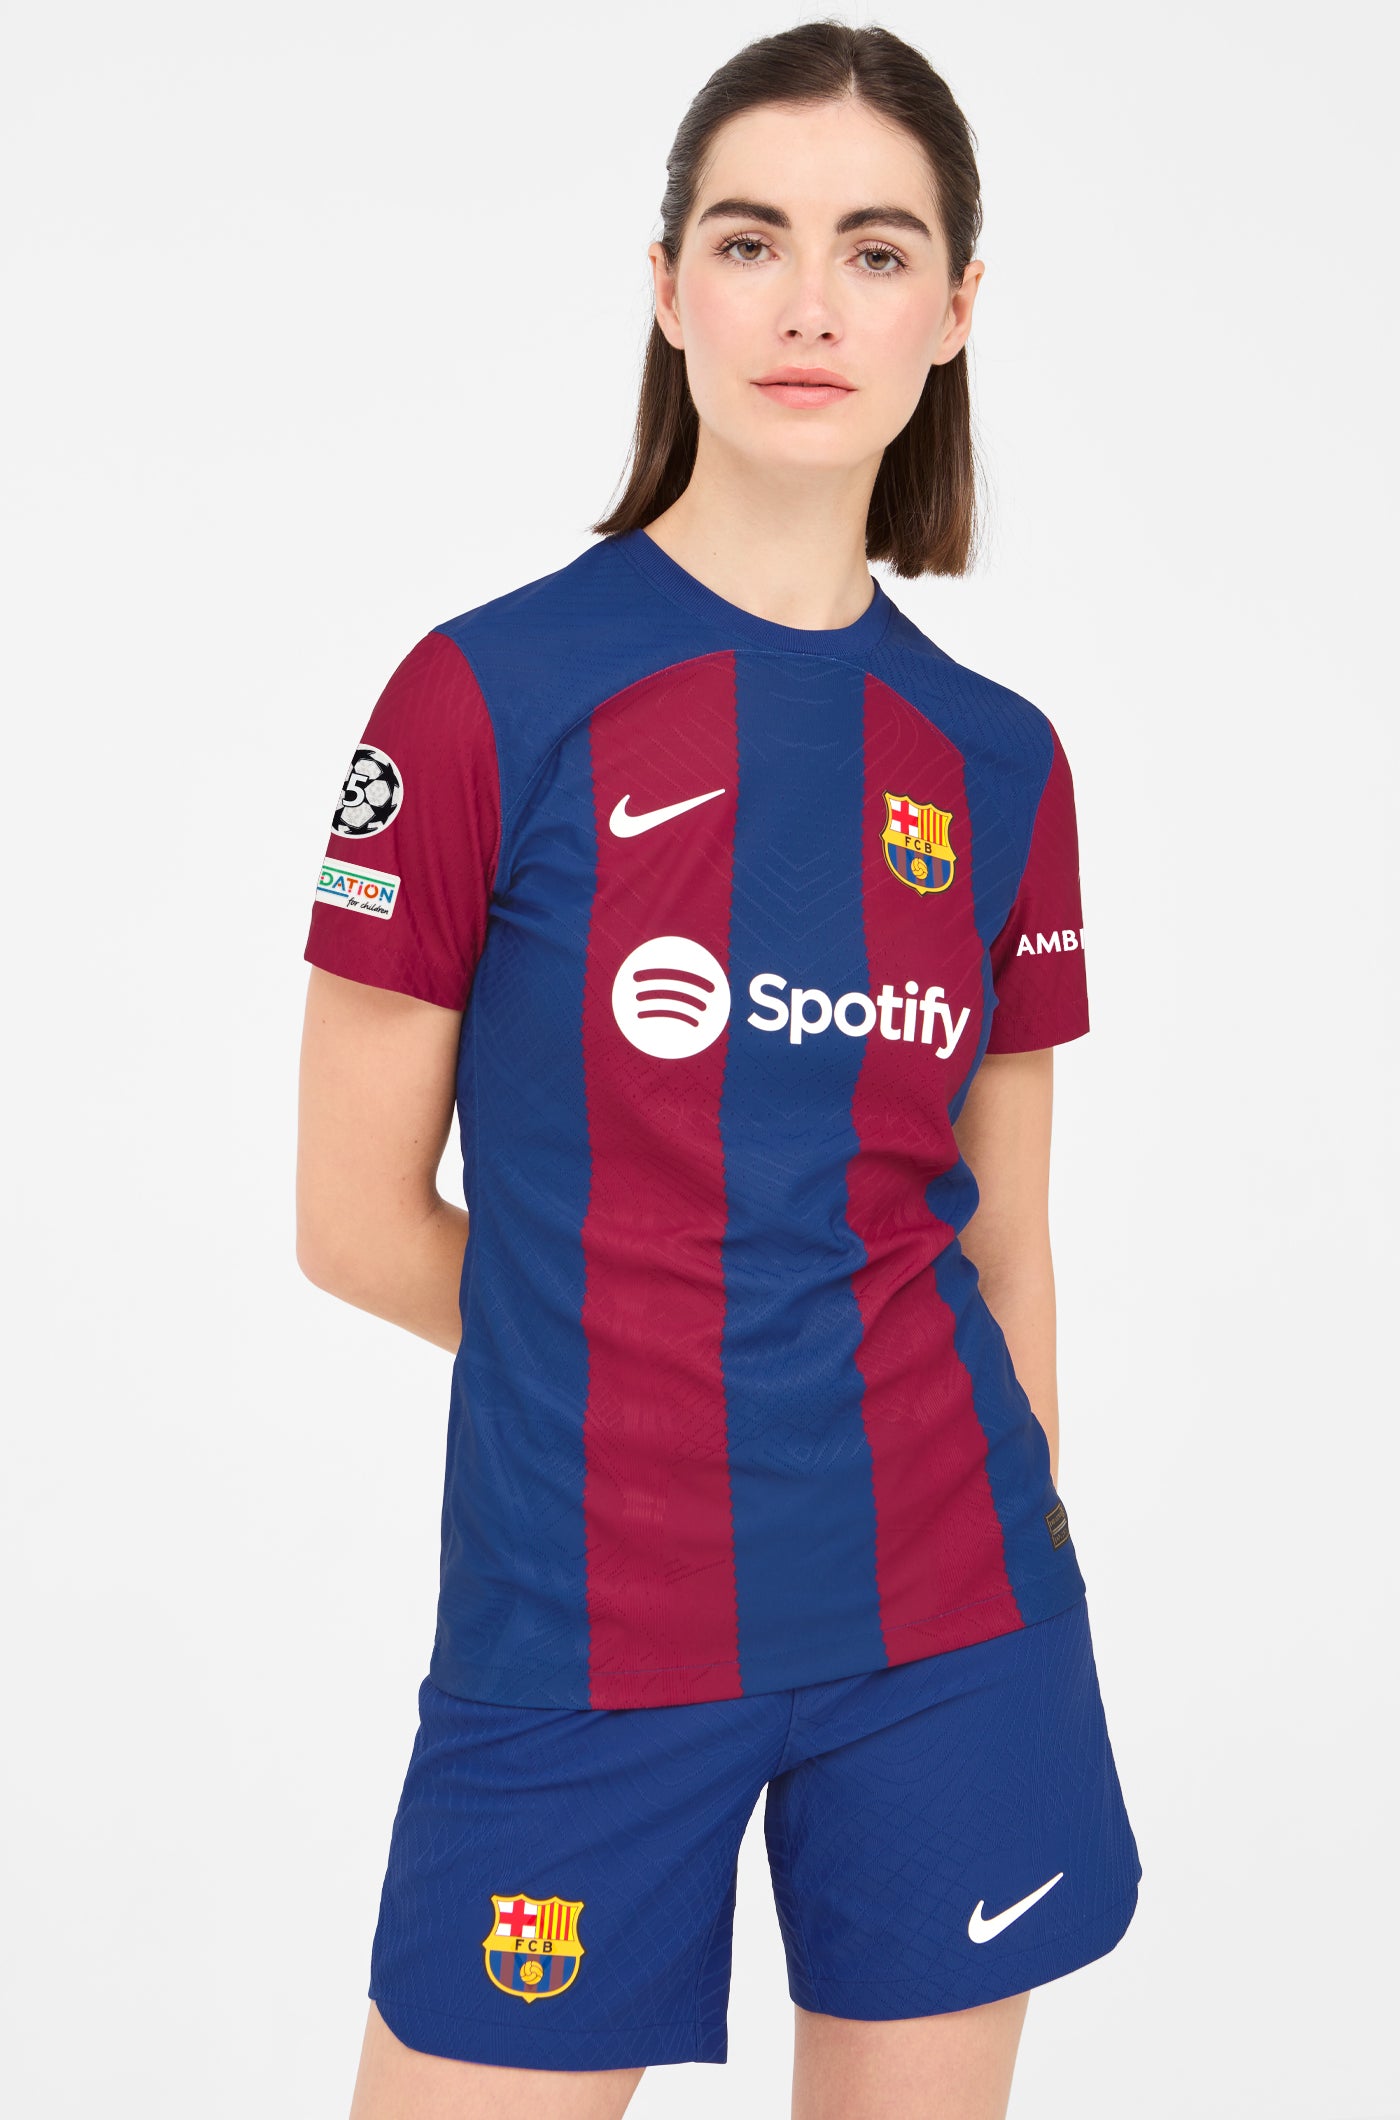 UCL FC Barcelona Home Shirt 23/24 Player's Edition - Women - RAPHINHA